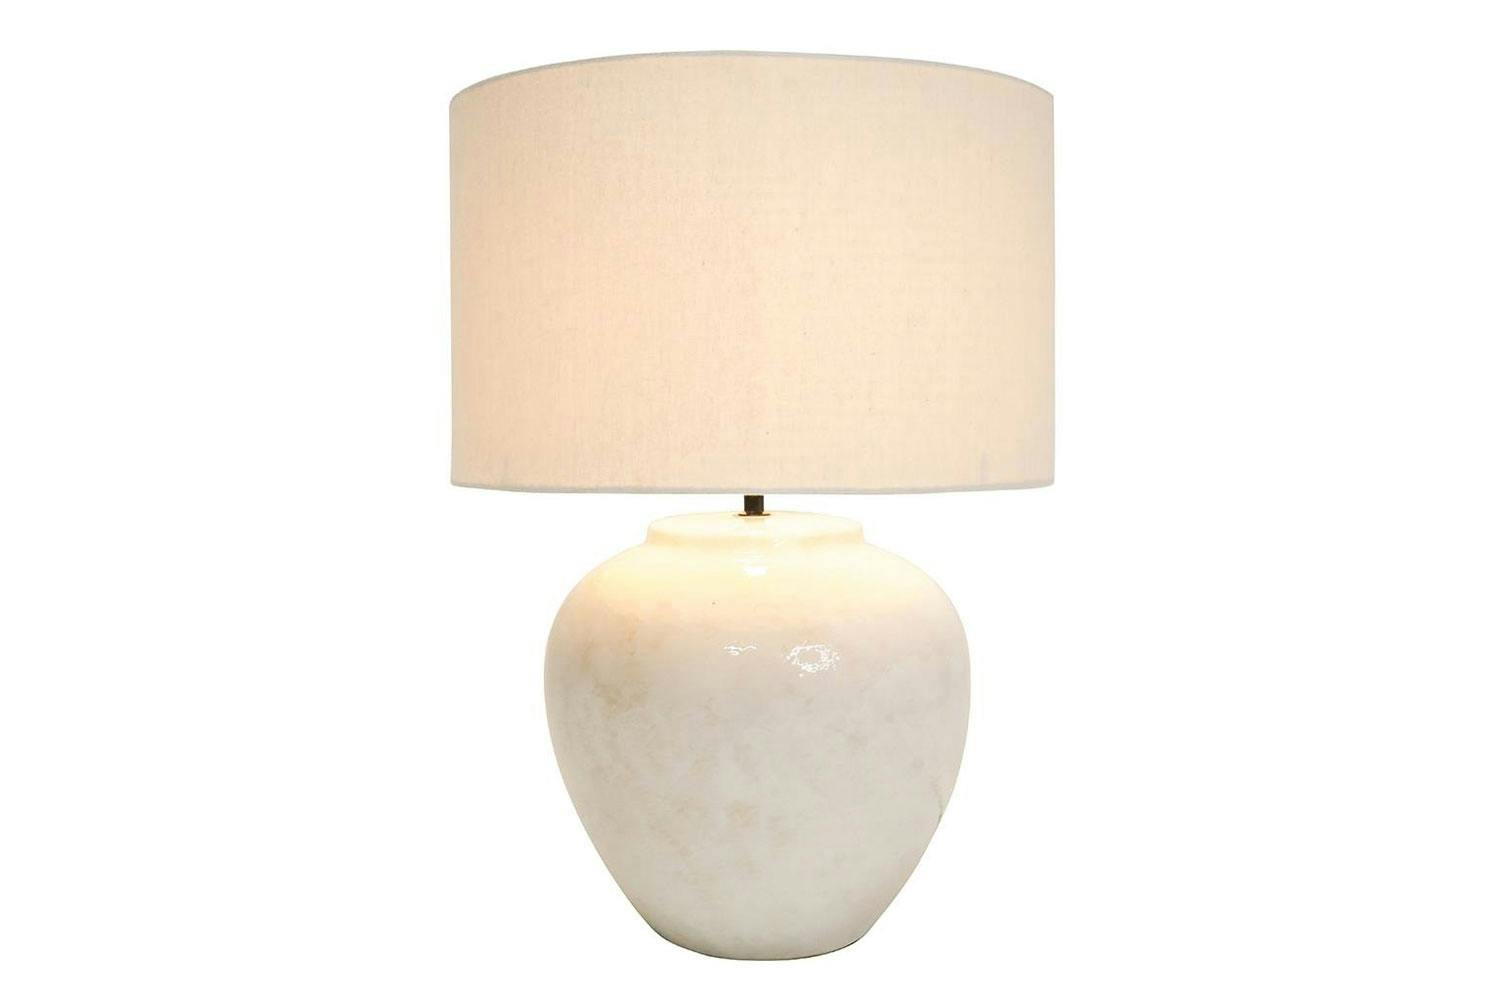 Luna 60cm Porcelain Table Lamp by Banyan Home - White